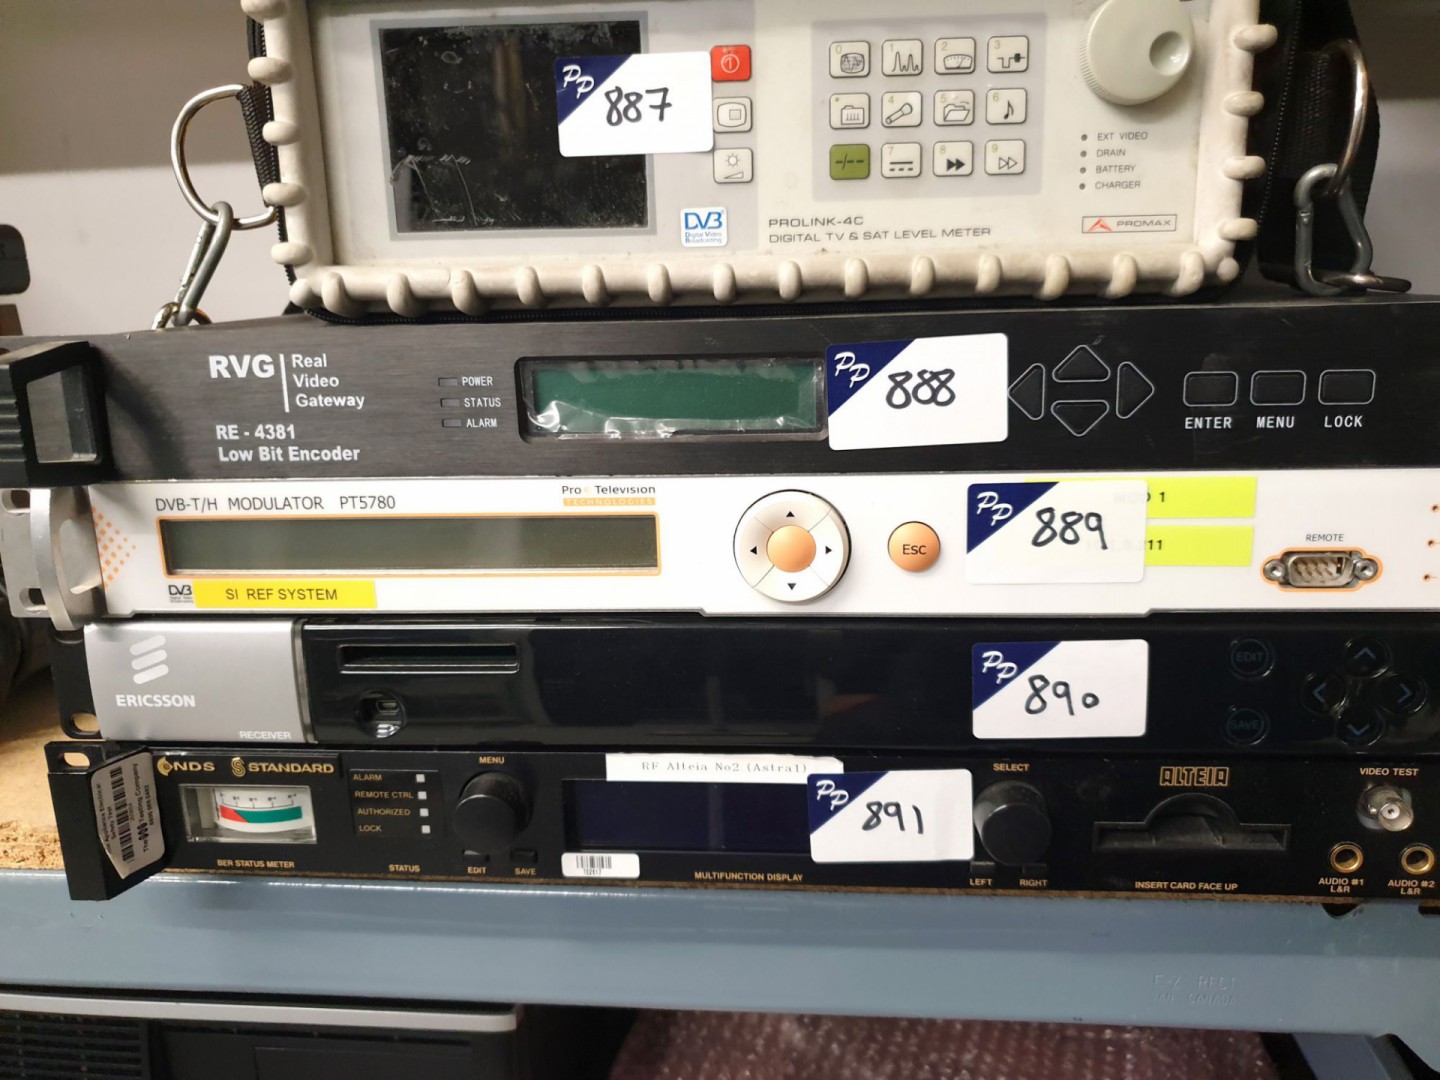 Pro television PT 5780 DVB-TH modulator